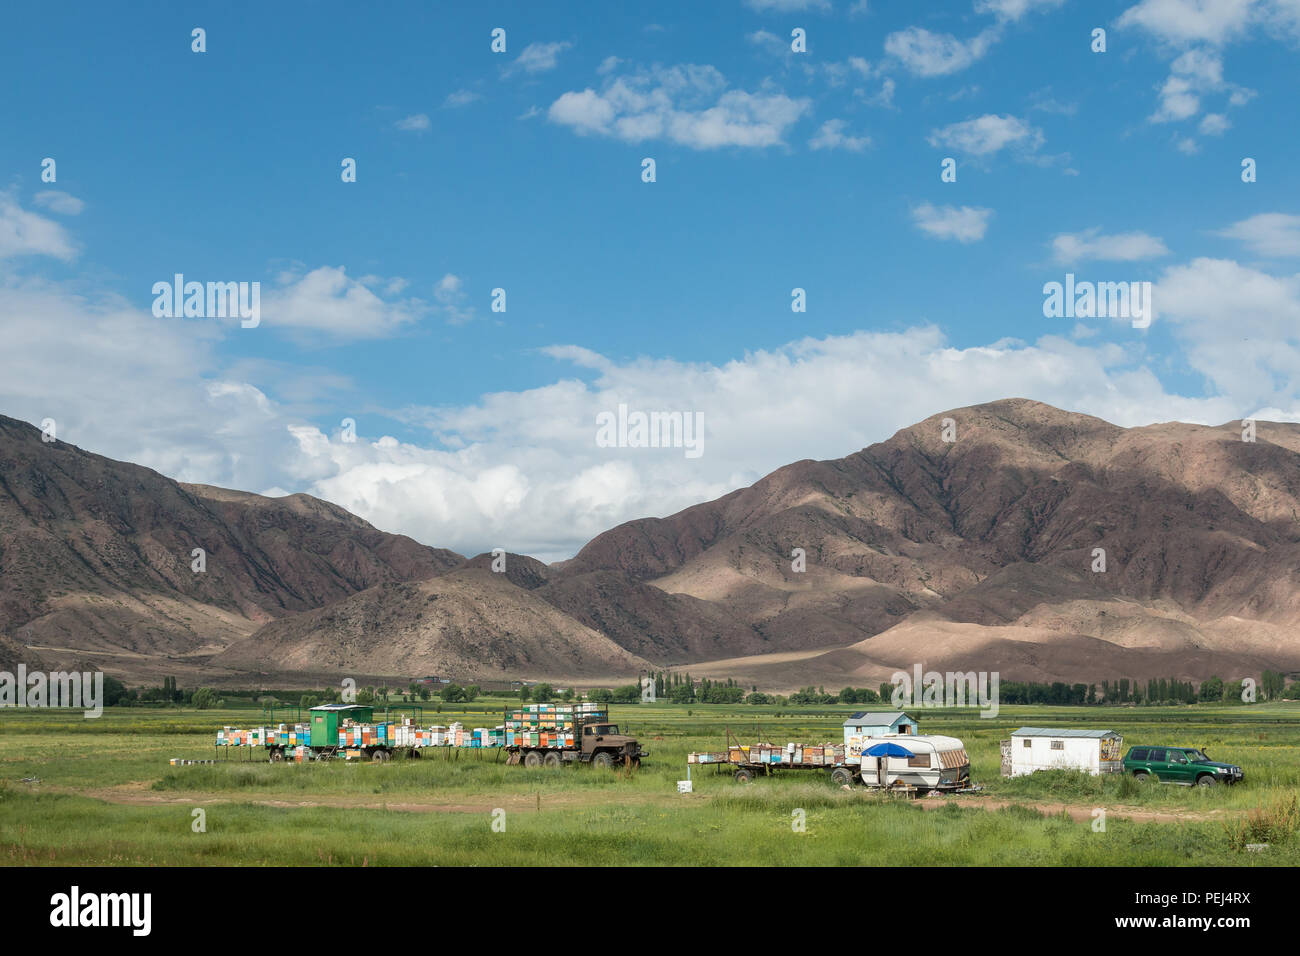 Rural agricultural scene with mountainous landscape near Bokonbayevo, Kyrgyzstan. Stock Photo